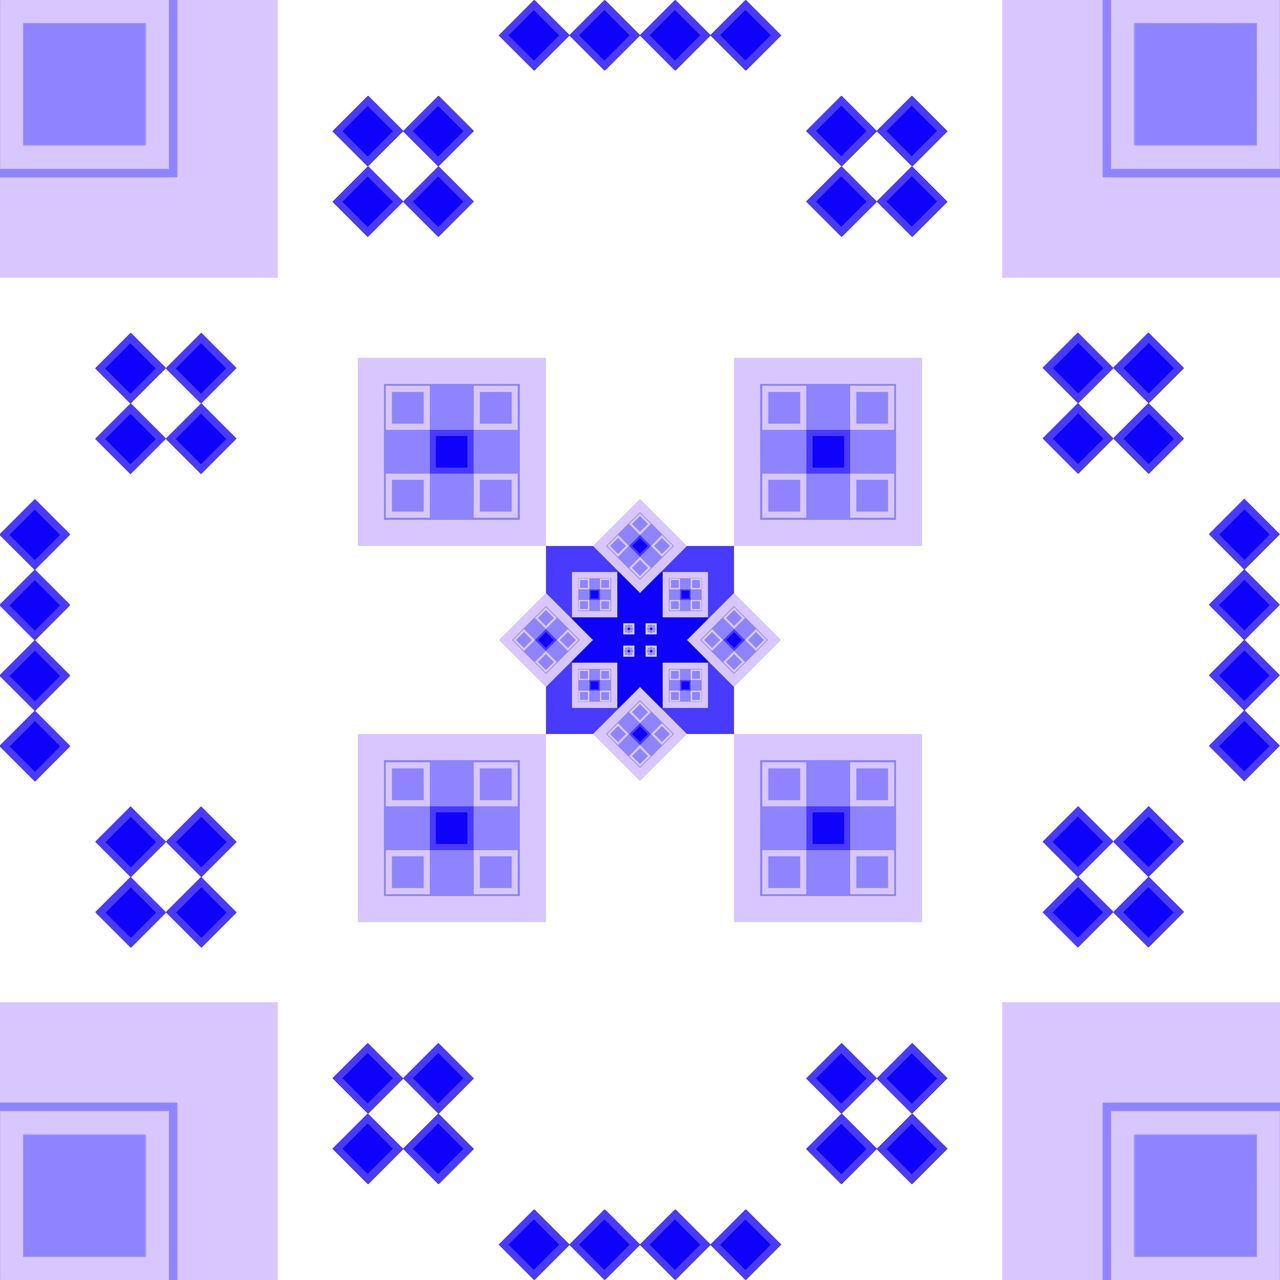 font, blue, purple, line, shape, pattern, design element, symbol, computer icon, communication, geometric shape